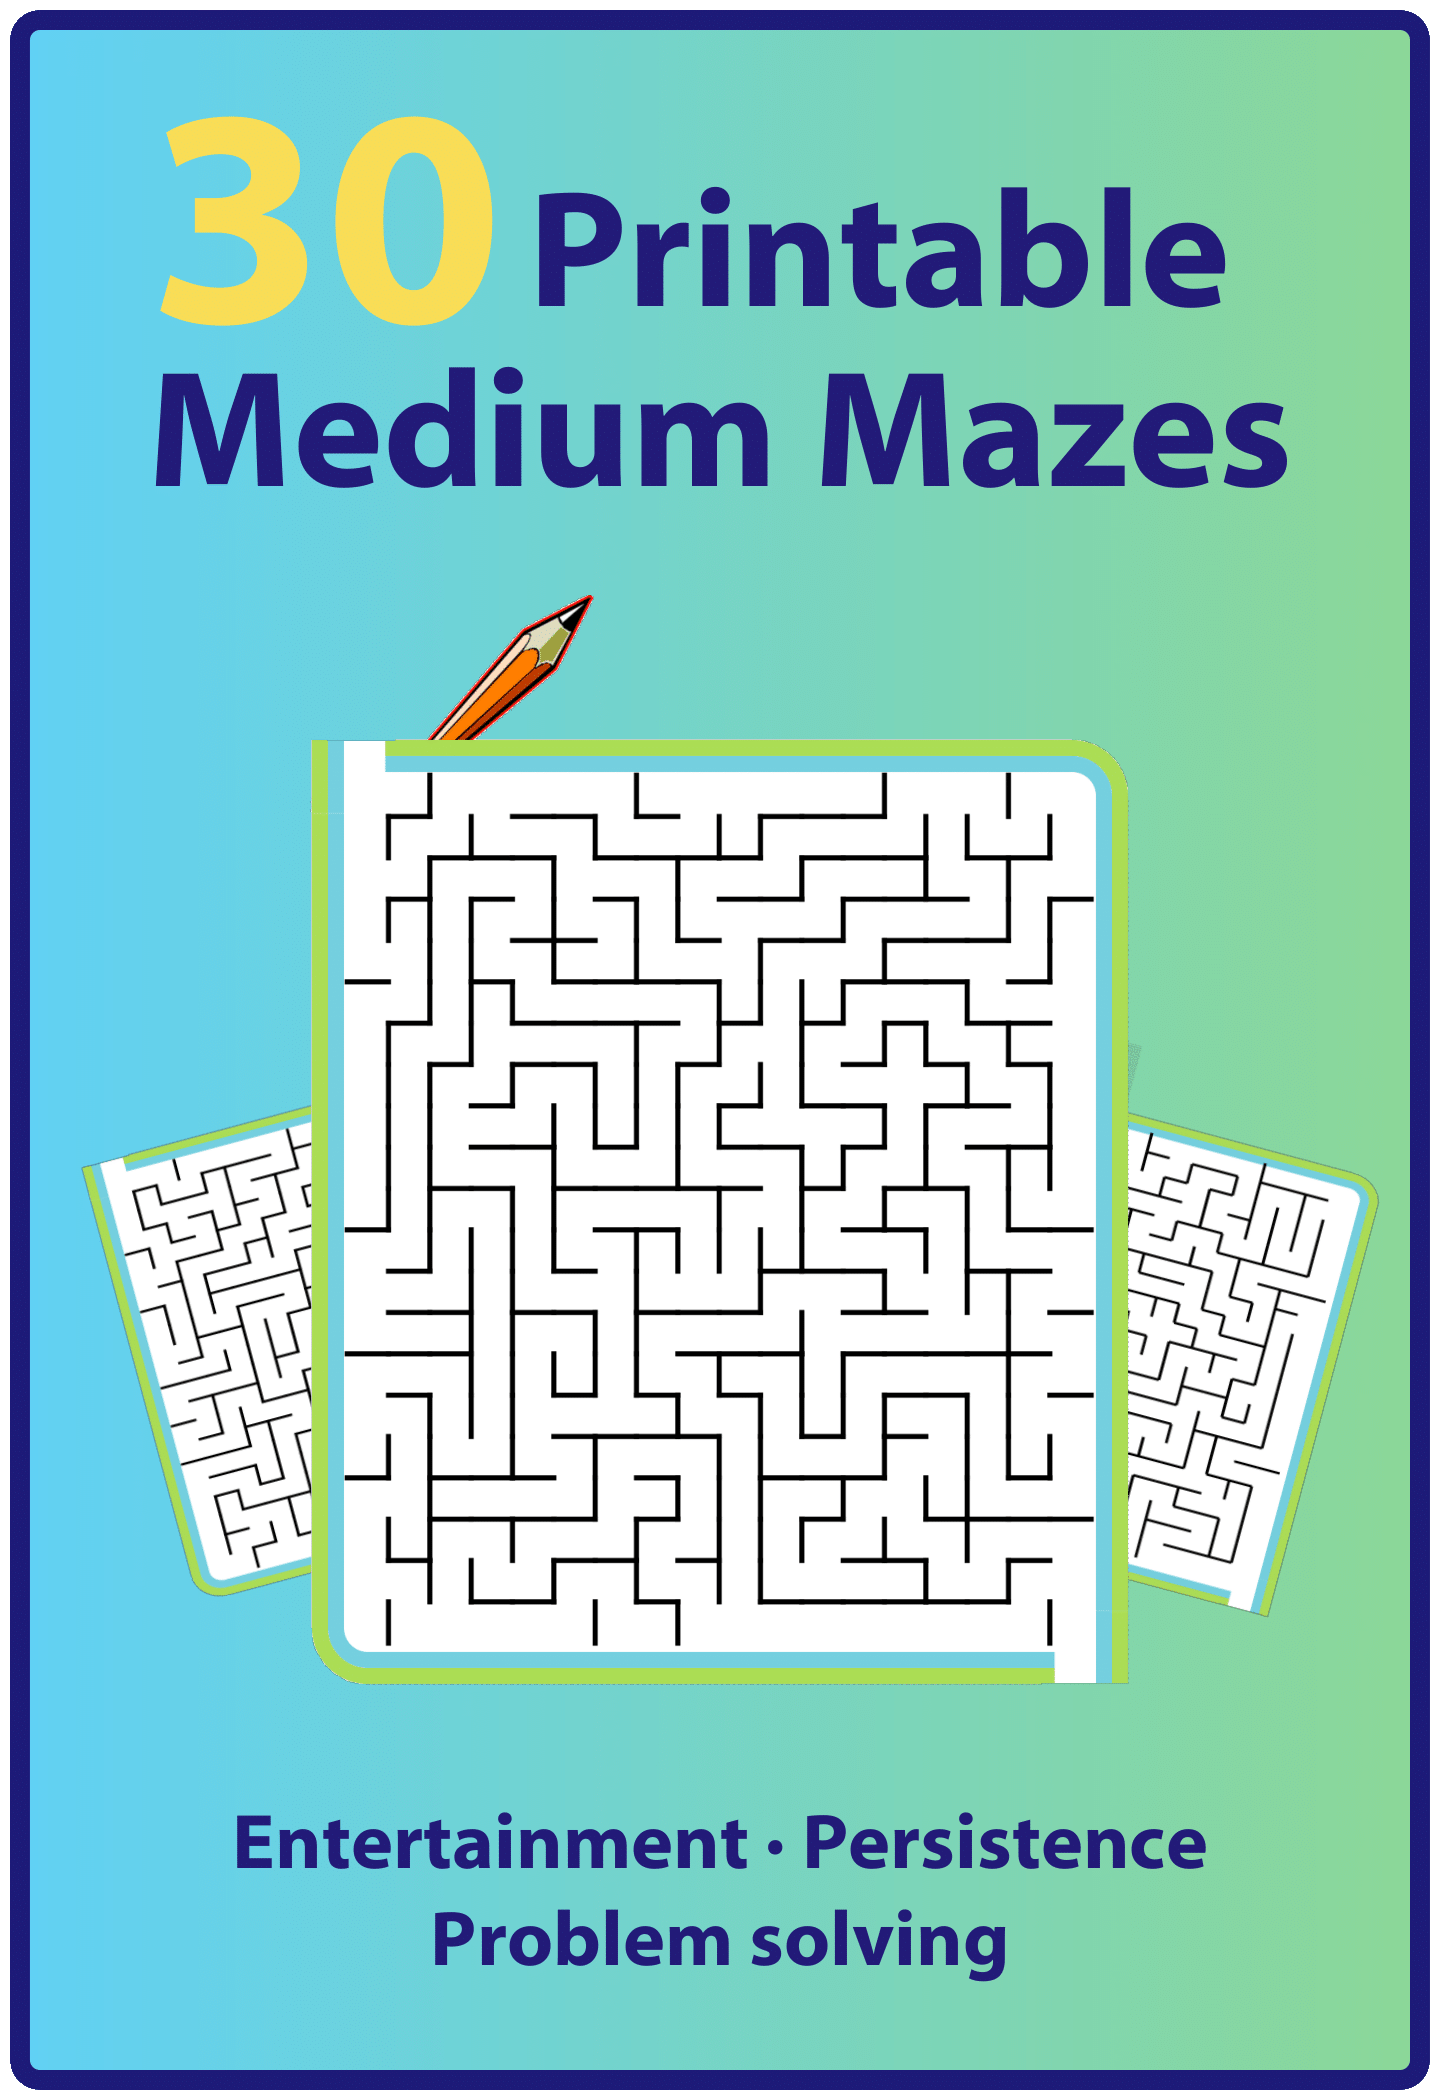 30 Printable Mazes